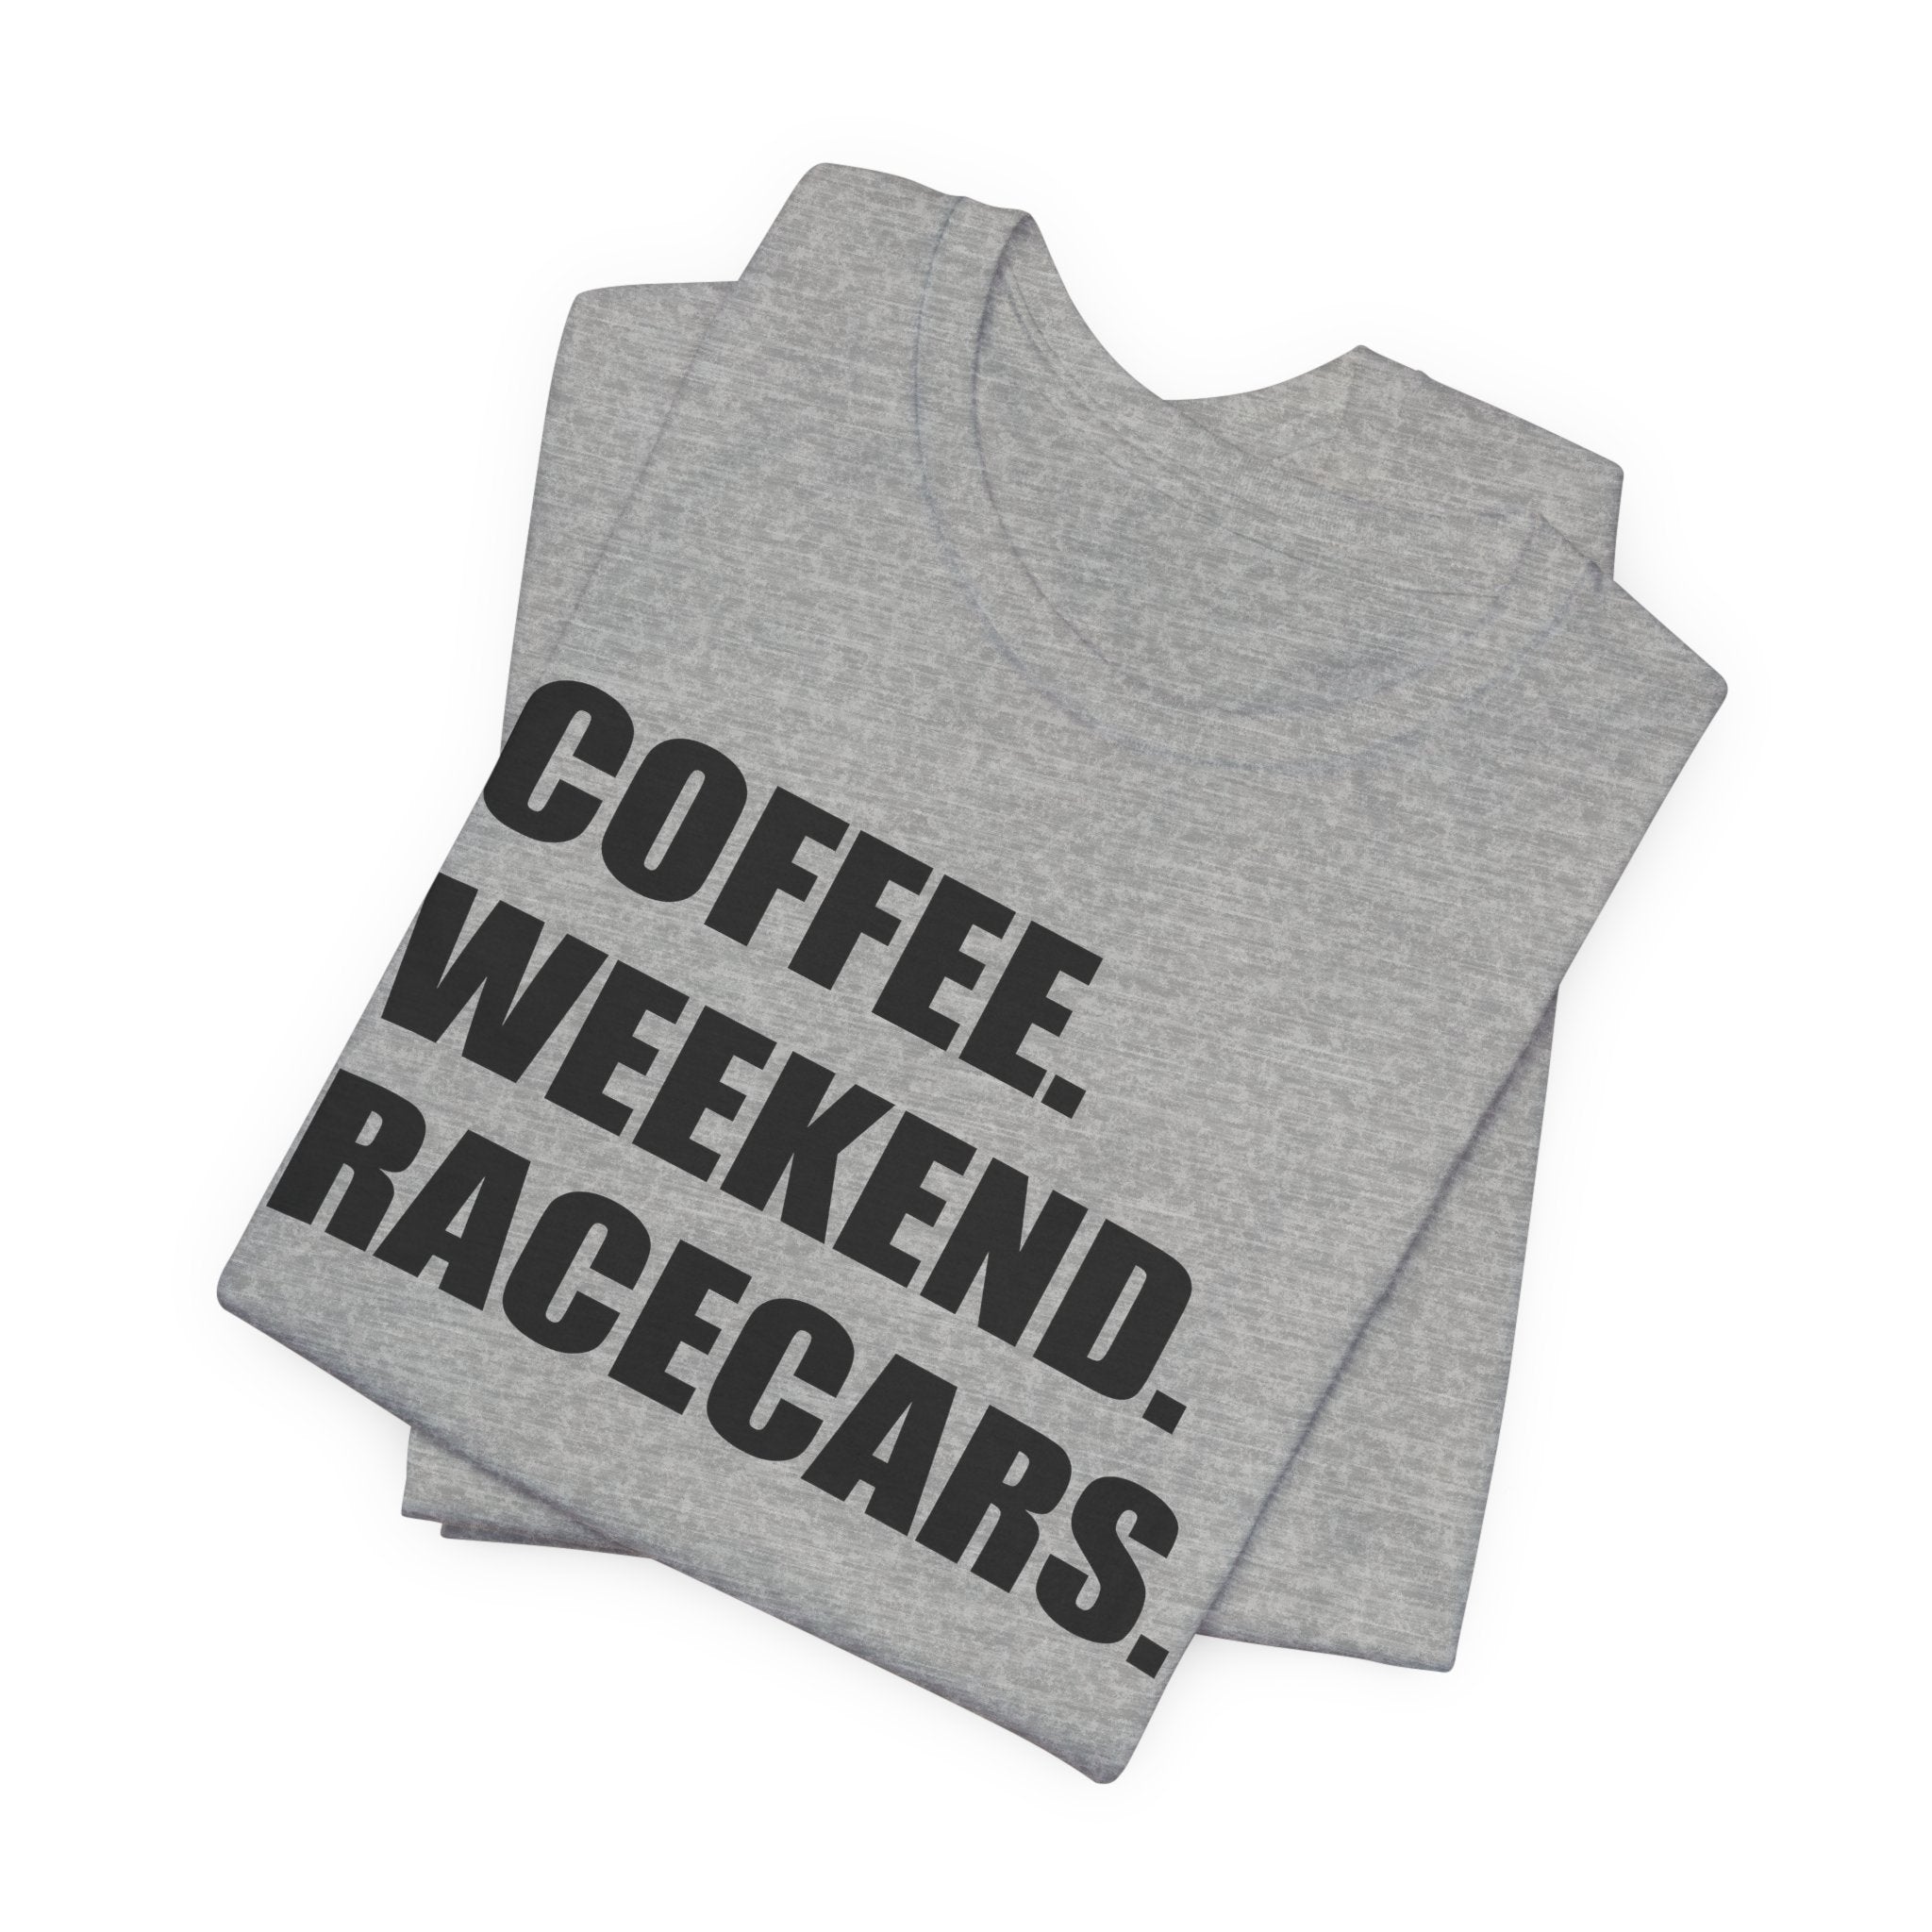 Coffee Weekend Racecars Unisex Raceday T-Shirt for Women